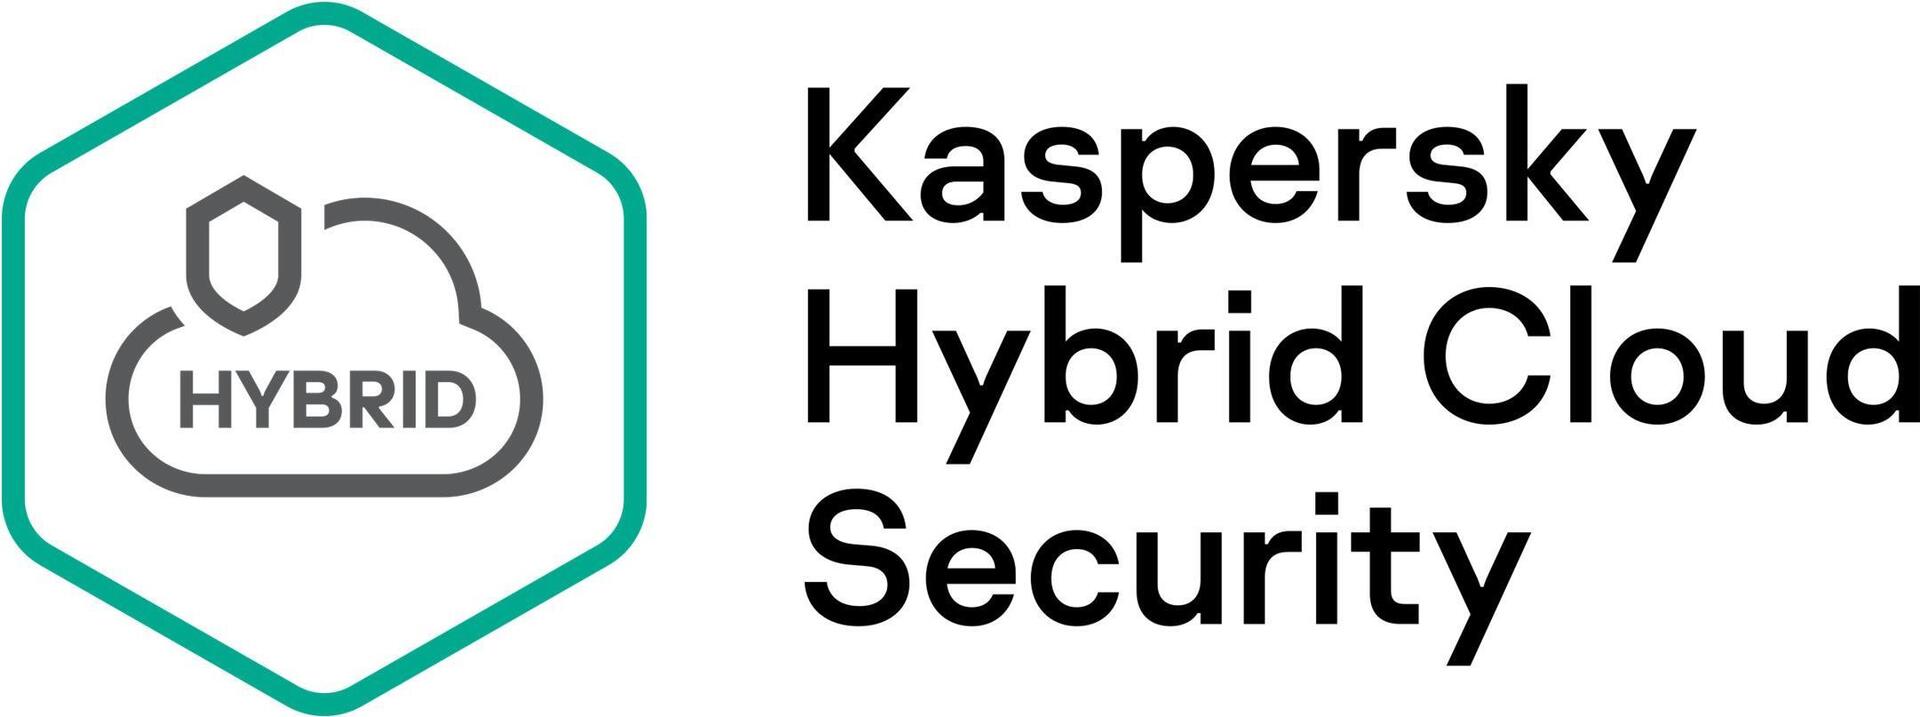 Kaspersky Hybrid Cloud Security Desktop (KL4155XAKD8)